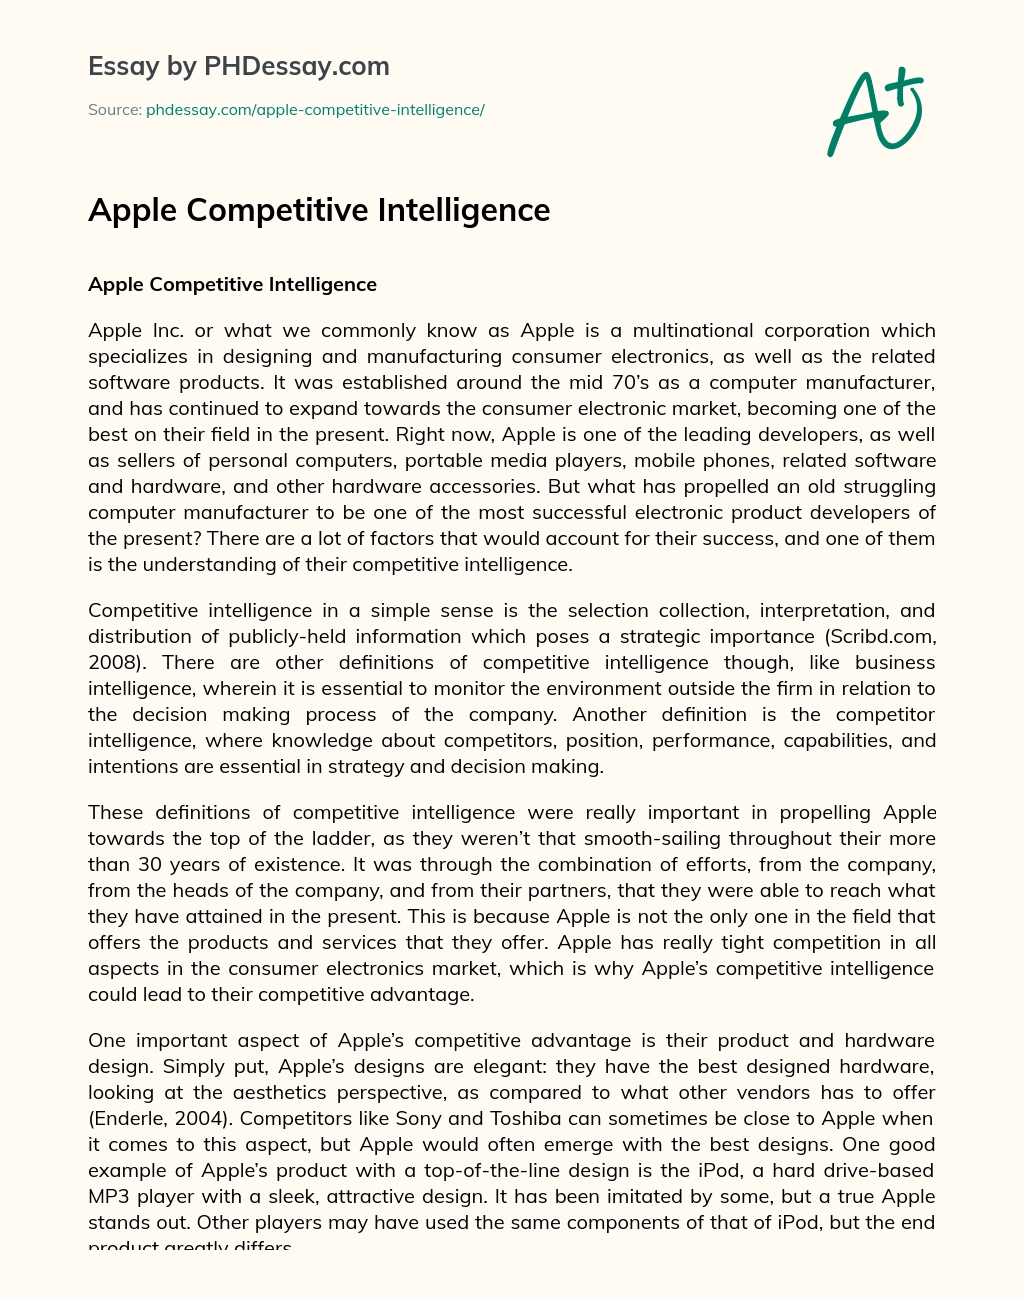 Apple Competitive Intelligence essay